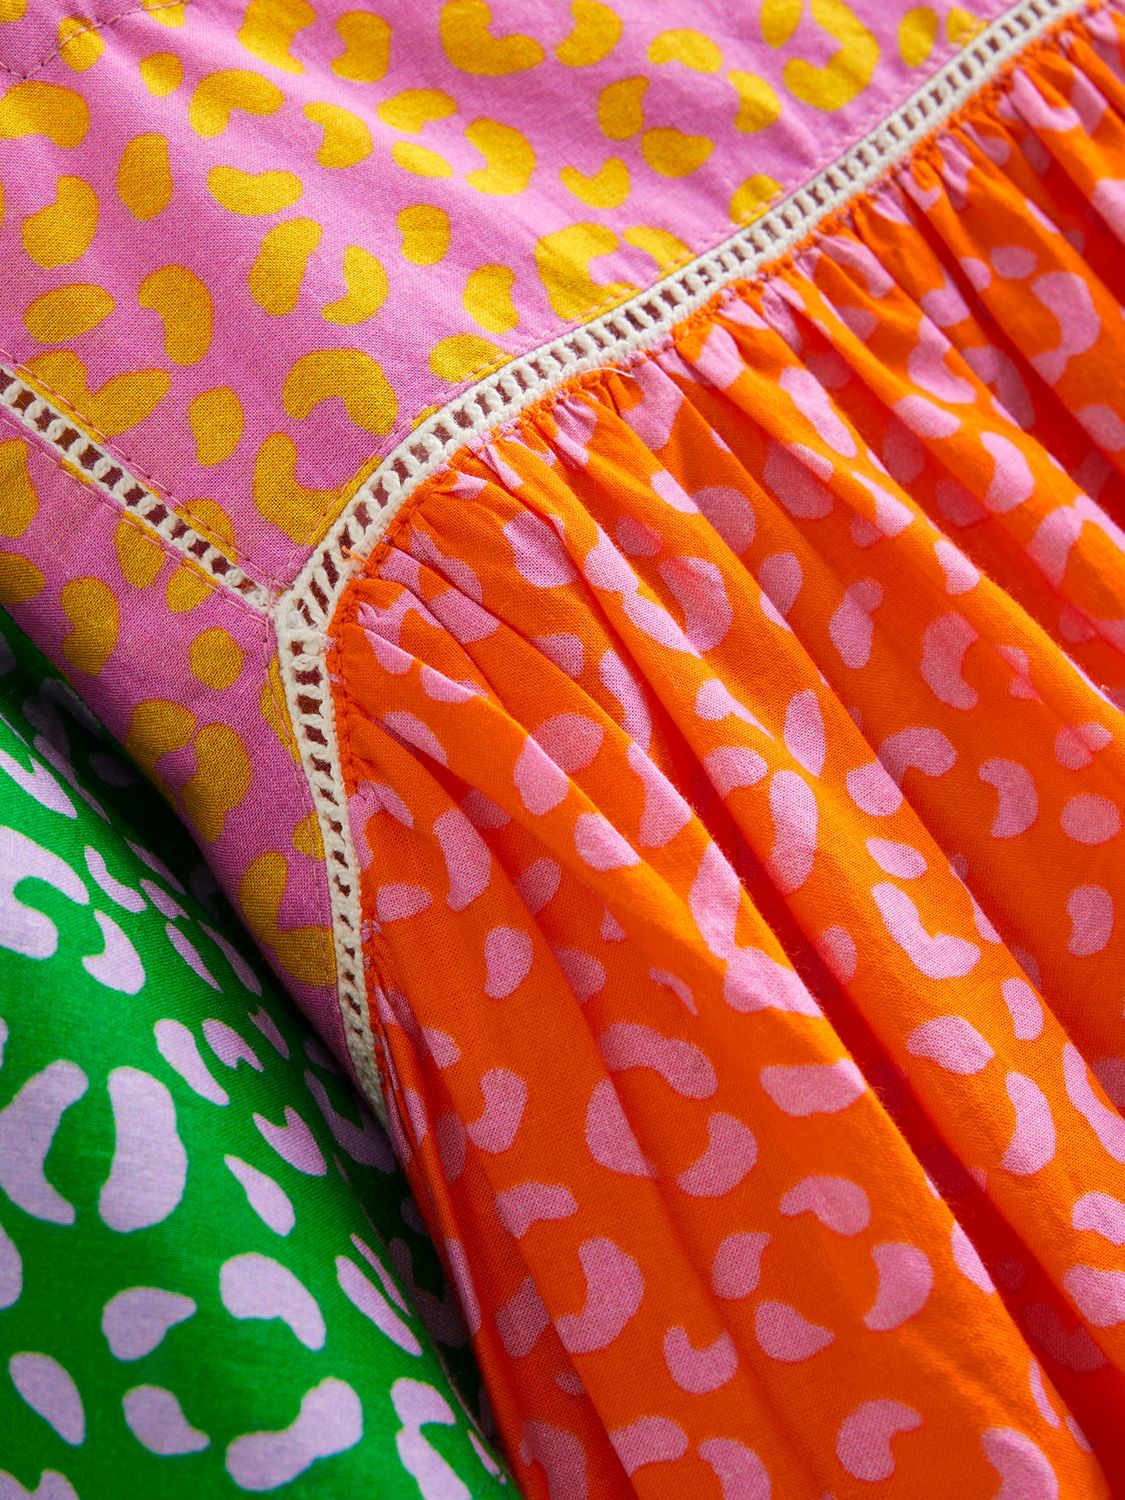 Mini Boden Kids' Colour Block Leopard Print Lightweight Holiday Dress, Multi, 2-3 years